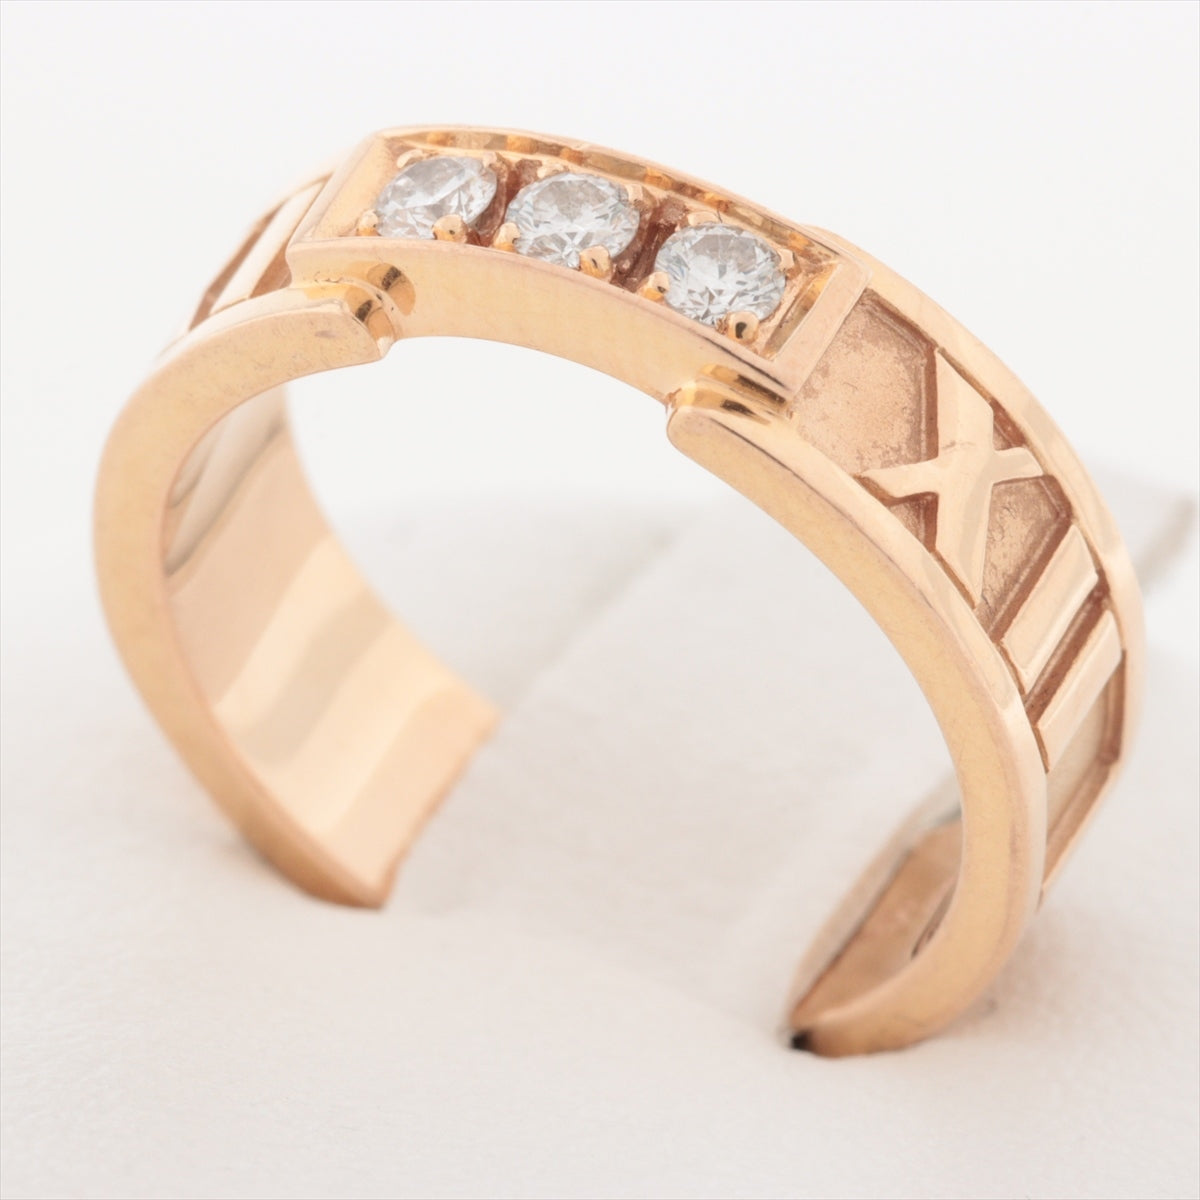 Tiffany Atlas 3P Diamond Ring 750(PG) 4.9g